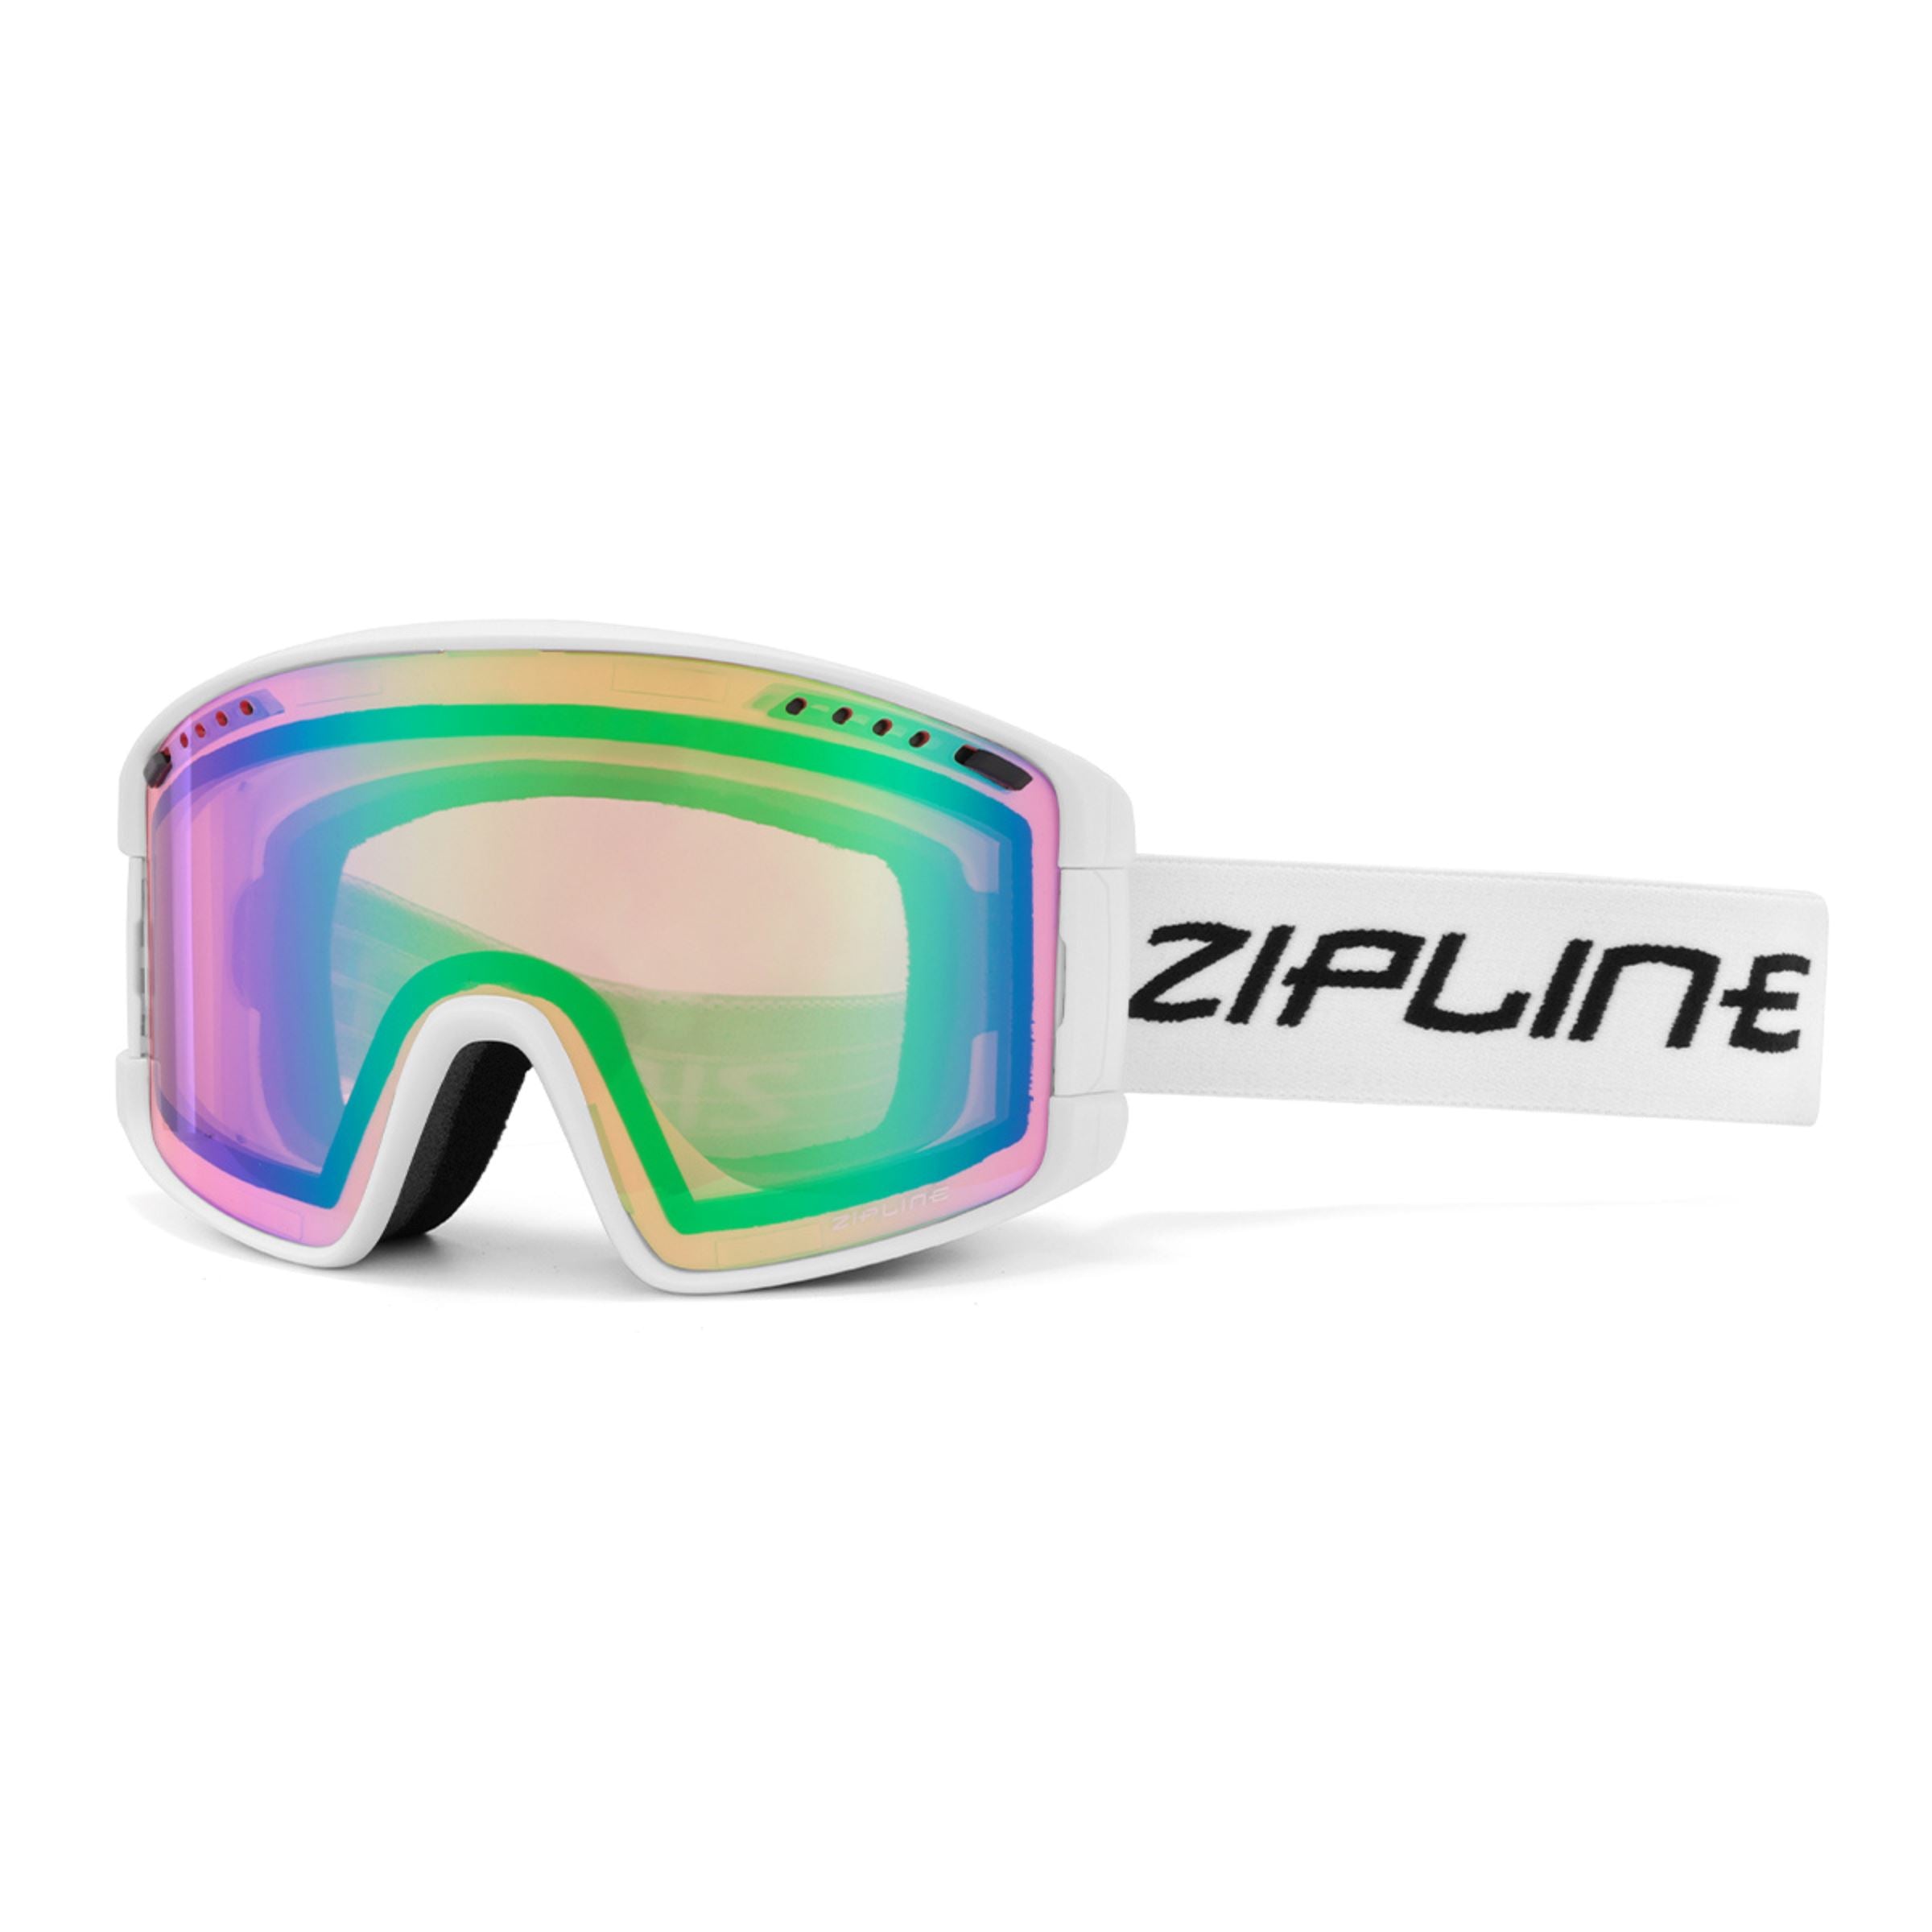 KLIK Goggles - Replacement Lenses Only ZiplineSki White Pink Paradise - Rose Lens 